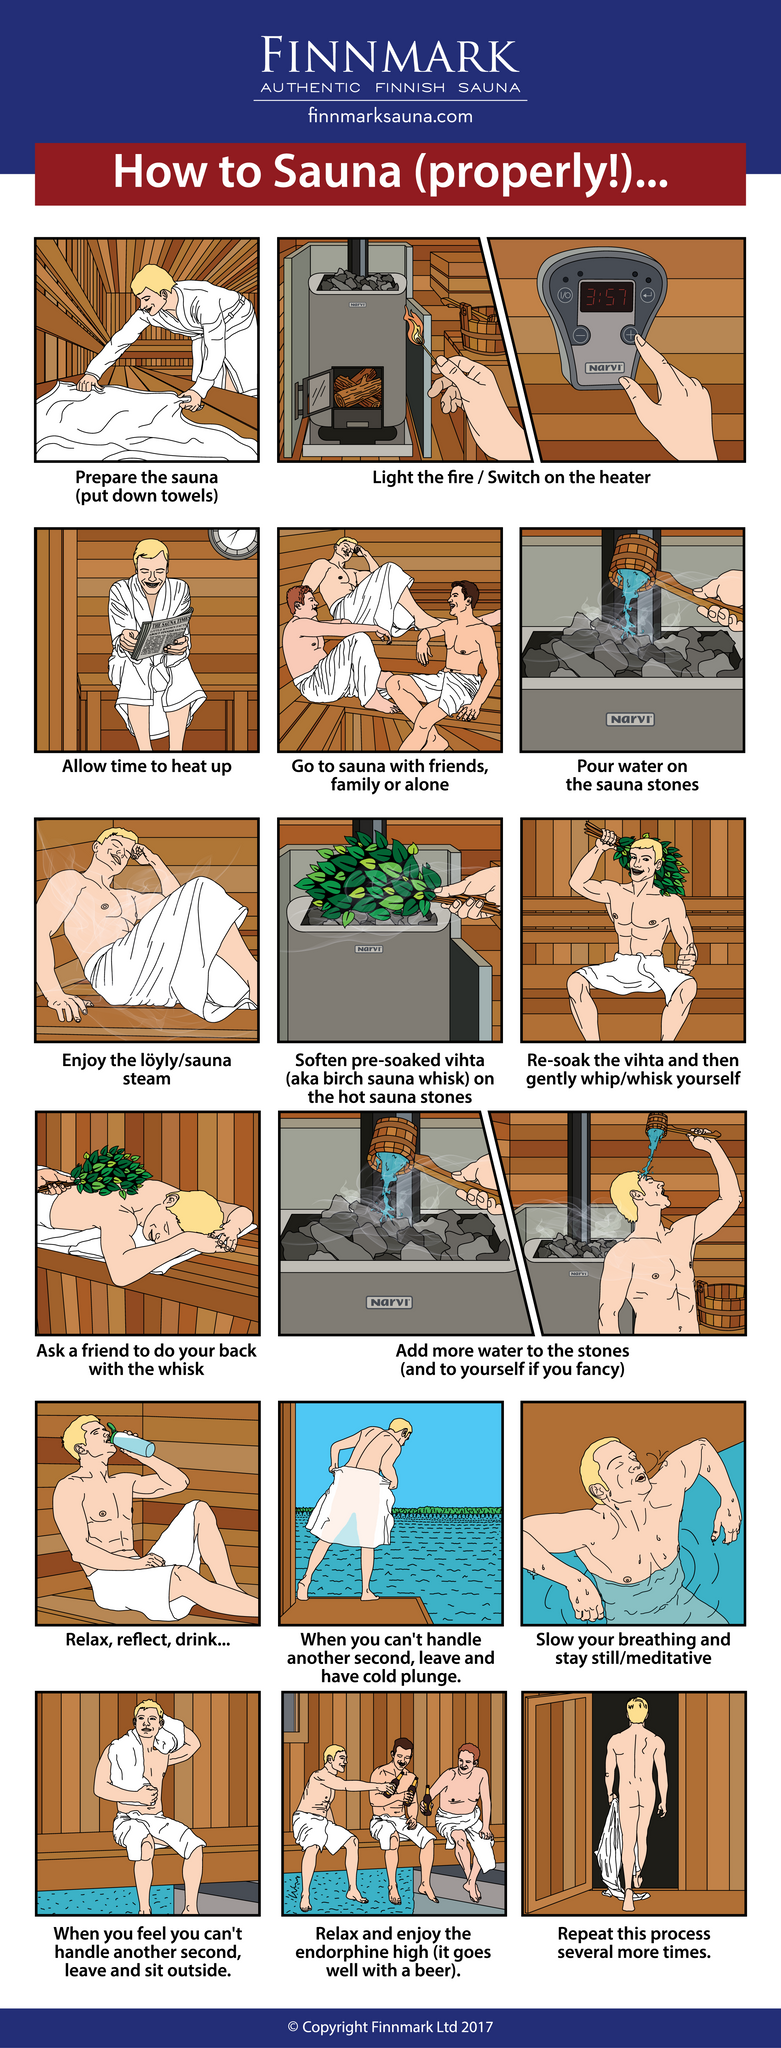 How to Sauna Properly by Finnmark Sauna